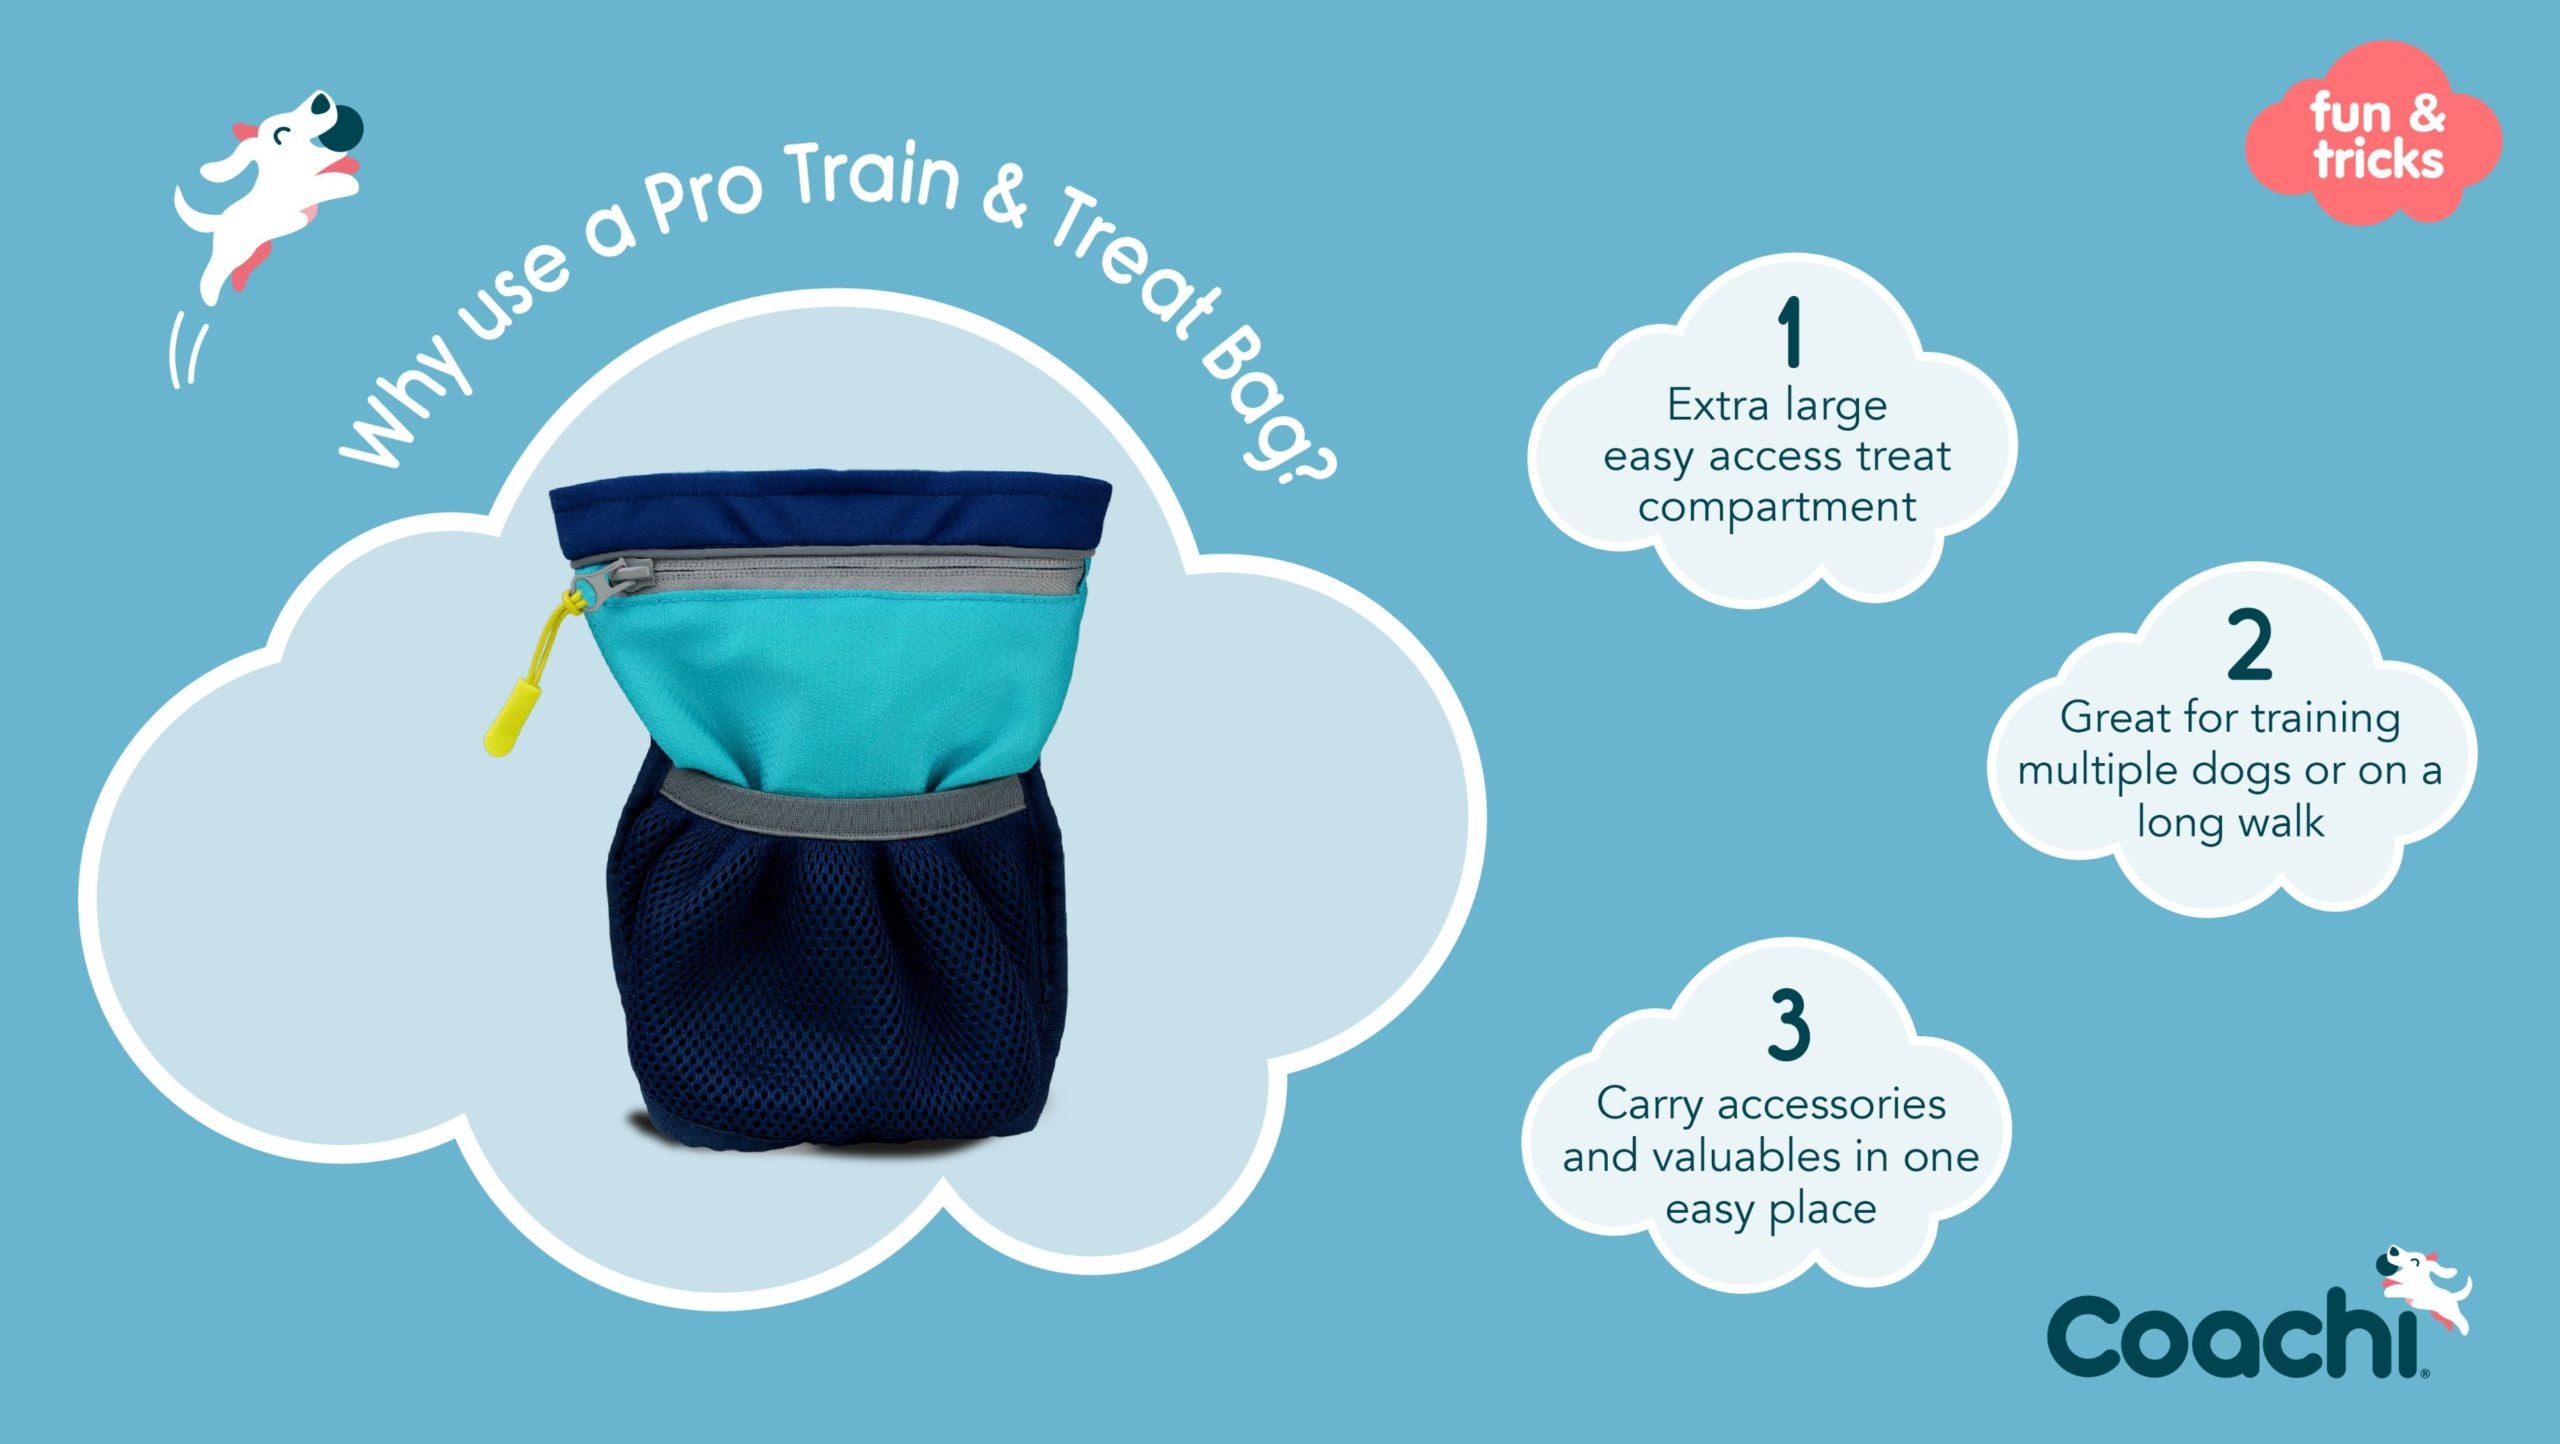 Coachi Pro Train & Treat Bag